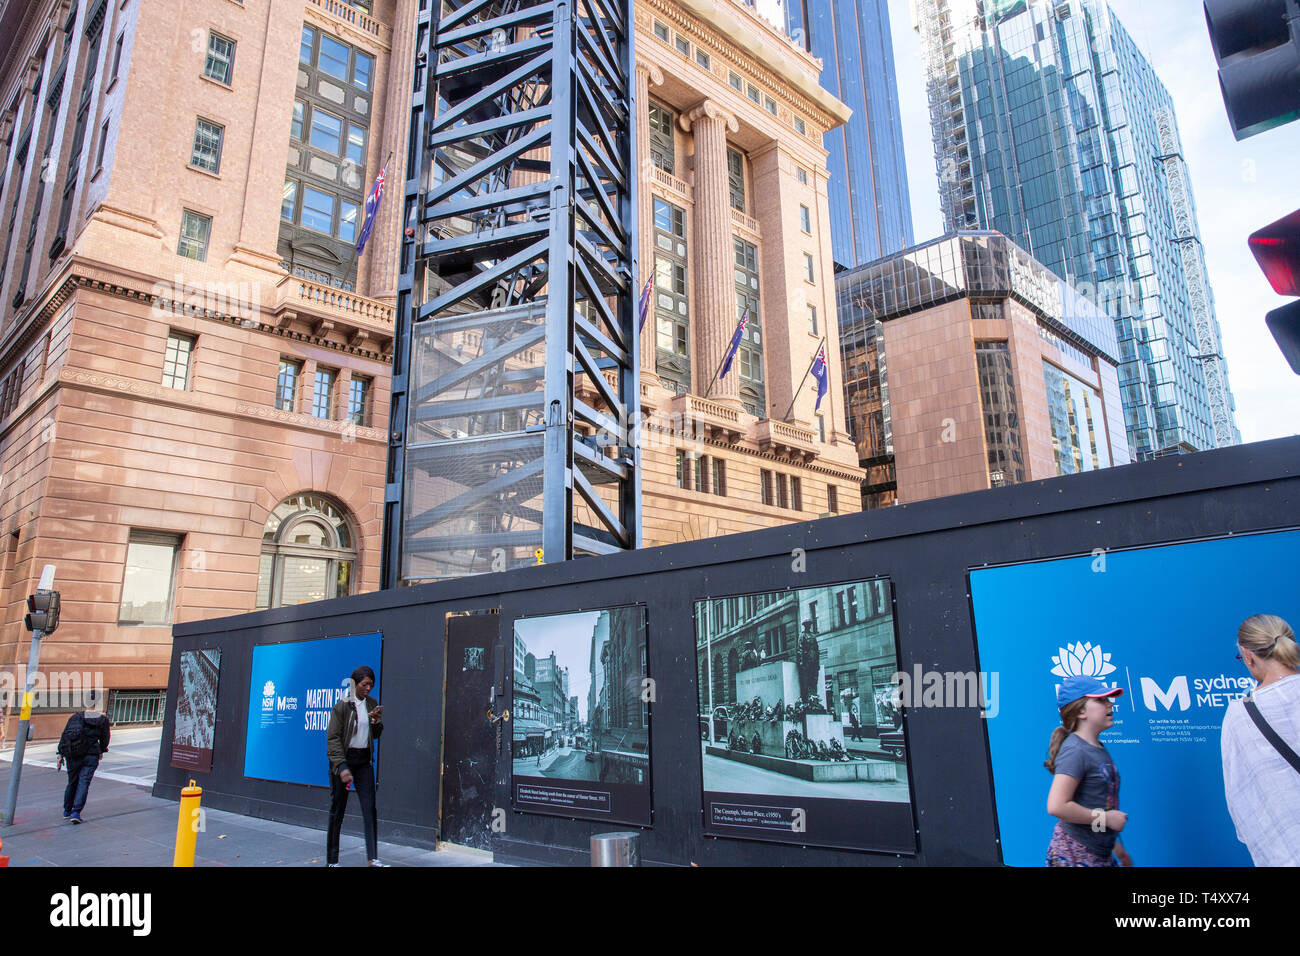 Construction of Sydney Metro public transport project and Martin Place rail station,Sydney,Australia Stock Photo